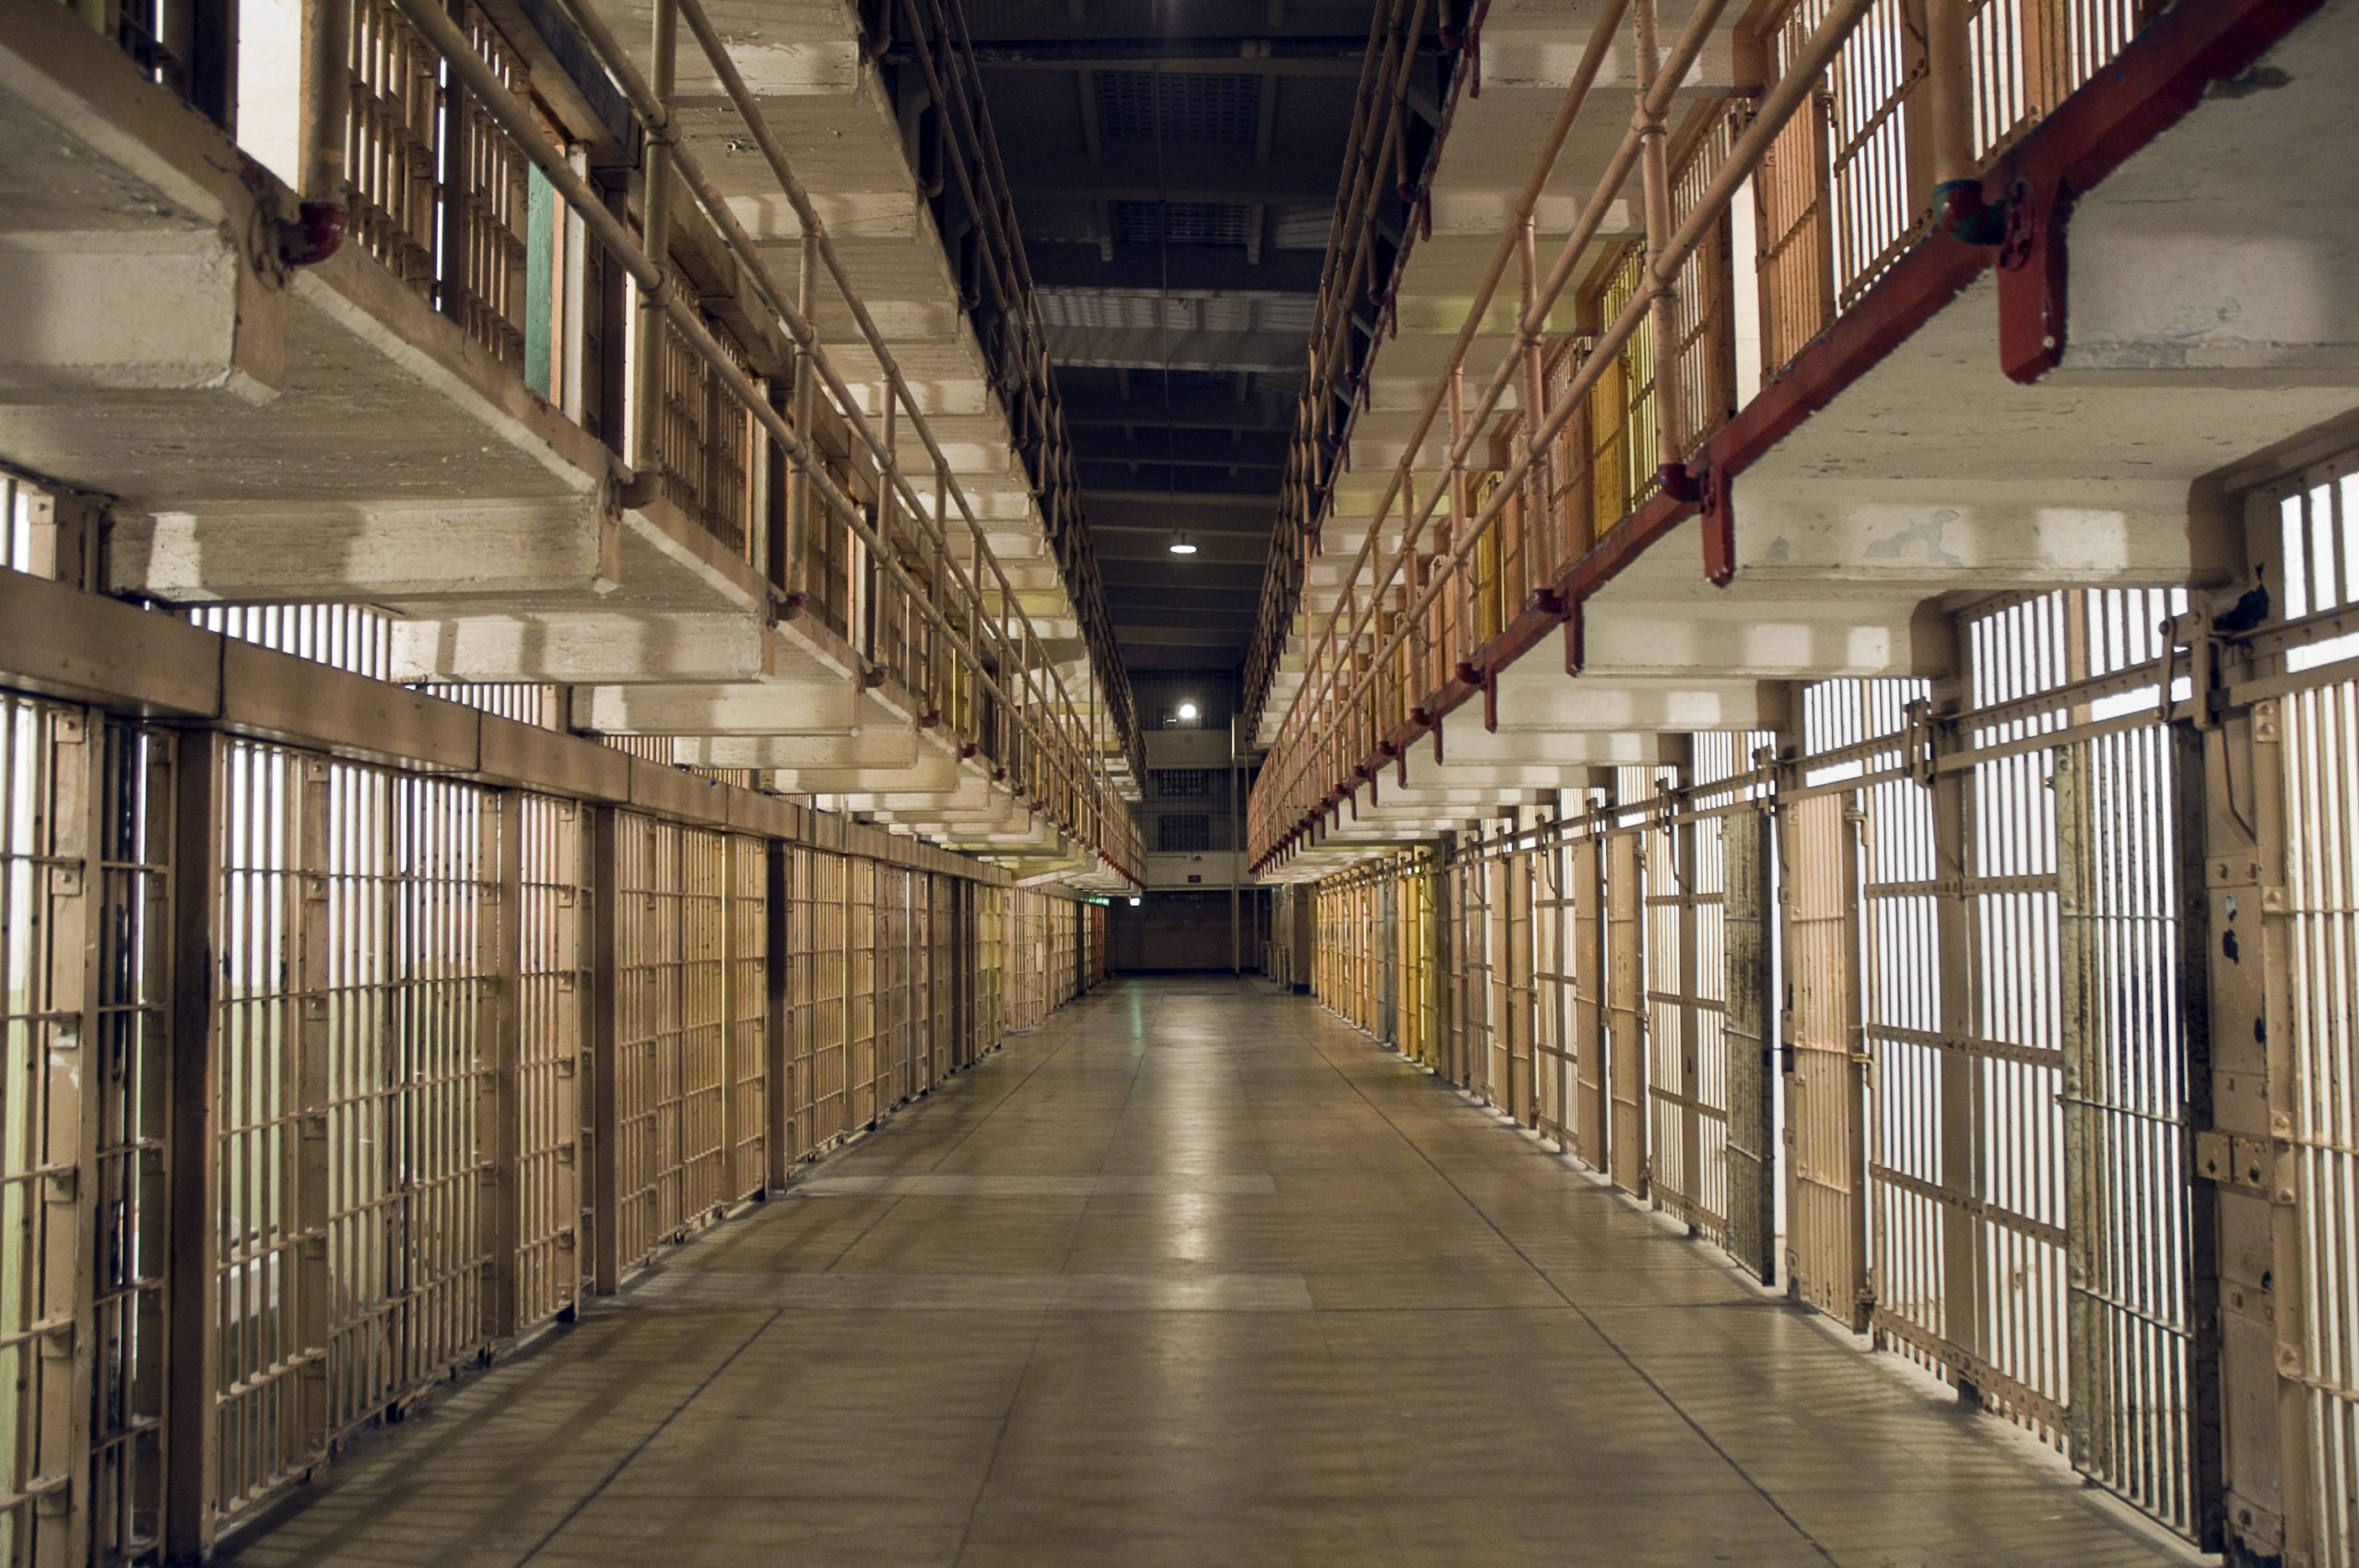 Inside Alcatraz Prison - Row of Bars and Cells